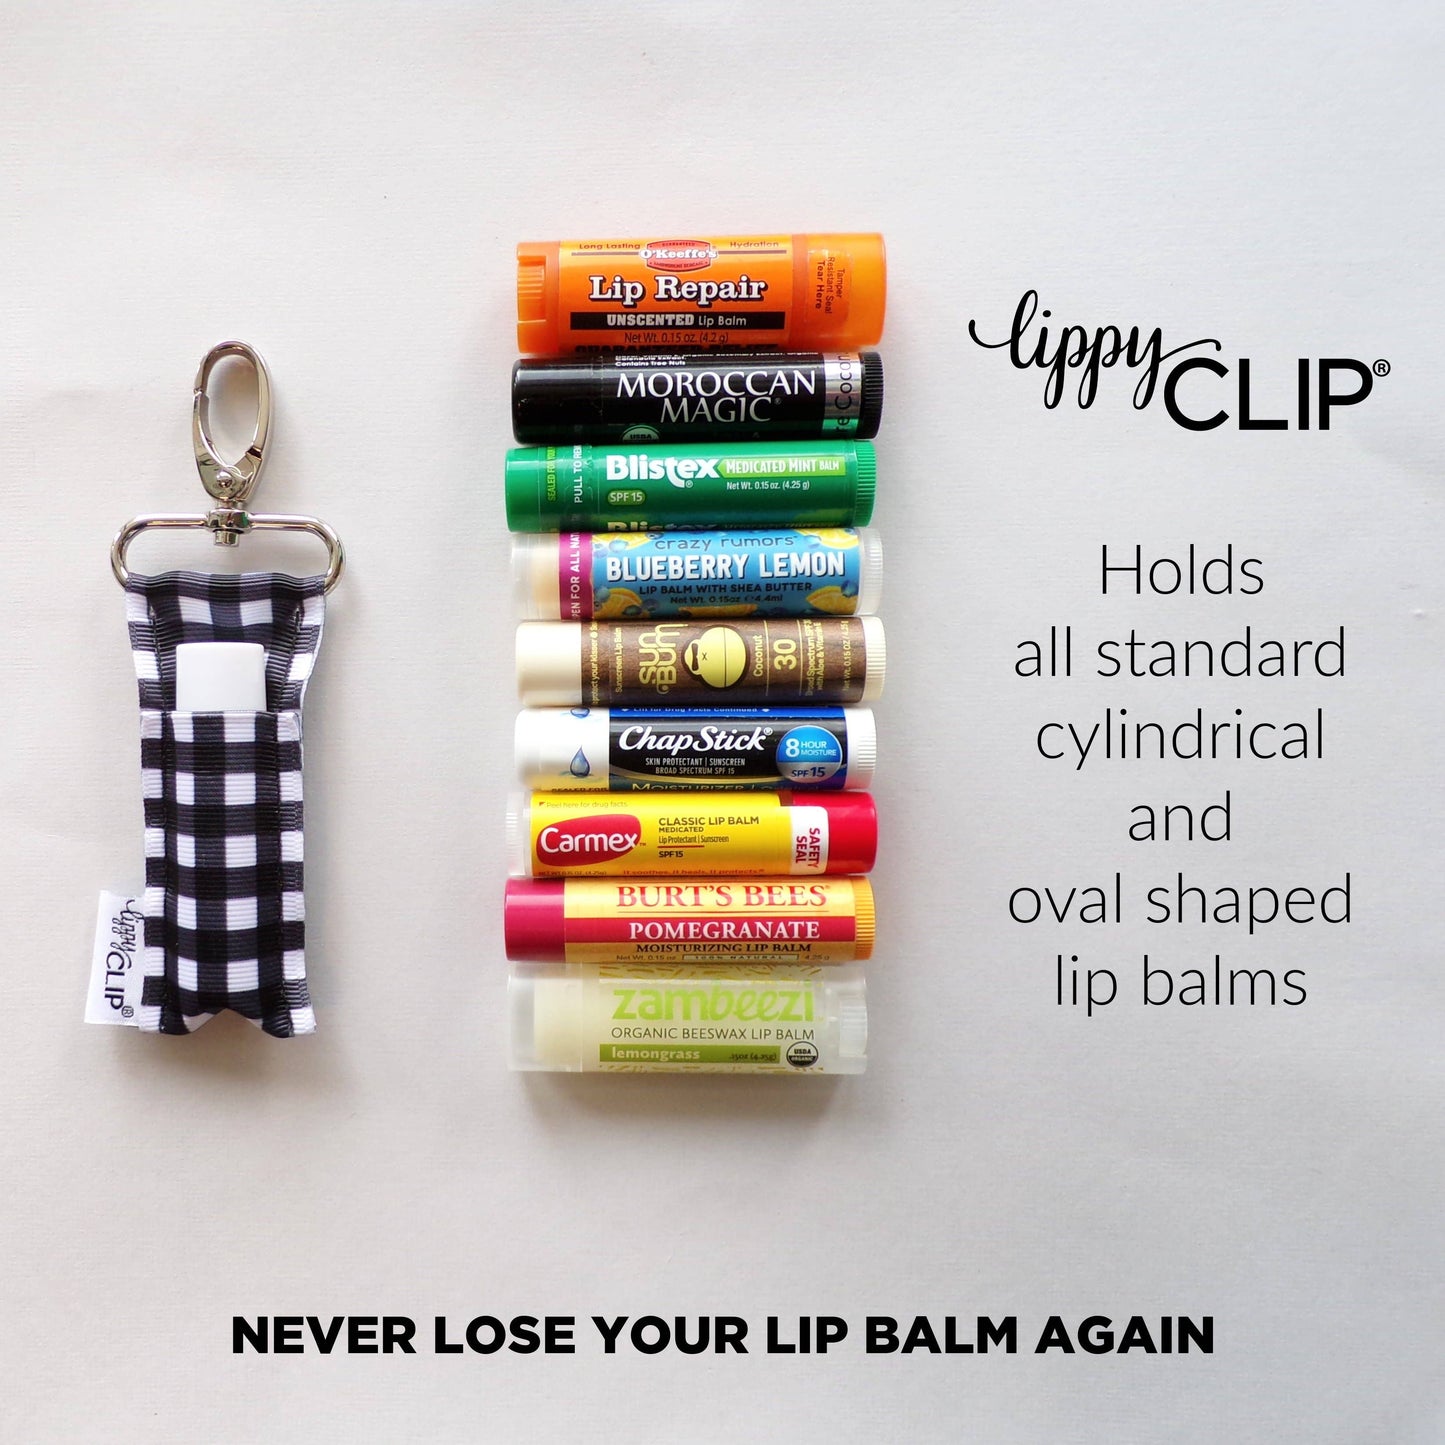 Tennis Match LippyClip® Lip Balm Holder for Chapstick